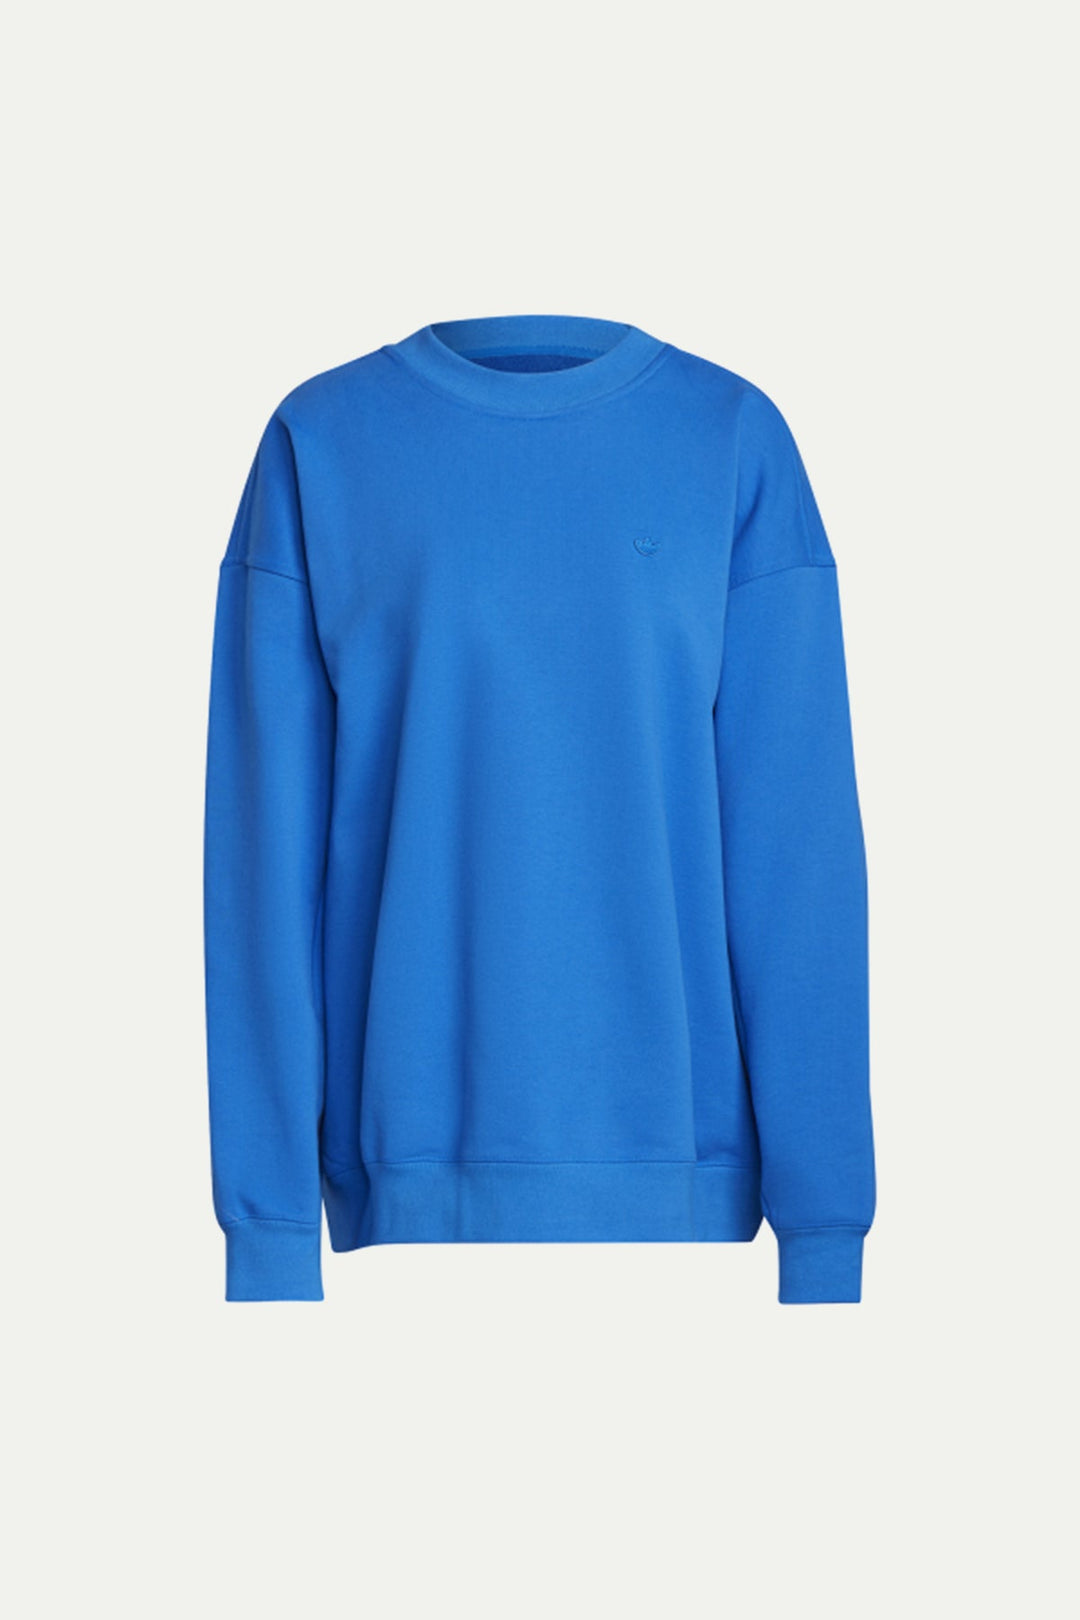 SWEATSHIRT BOורוד בצבע כחול - Adidas